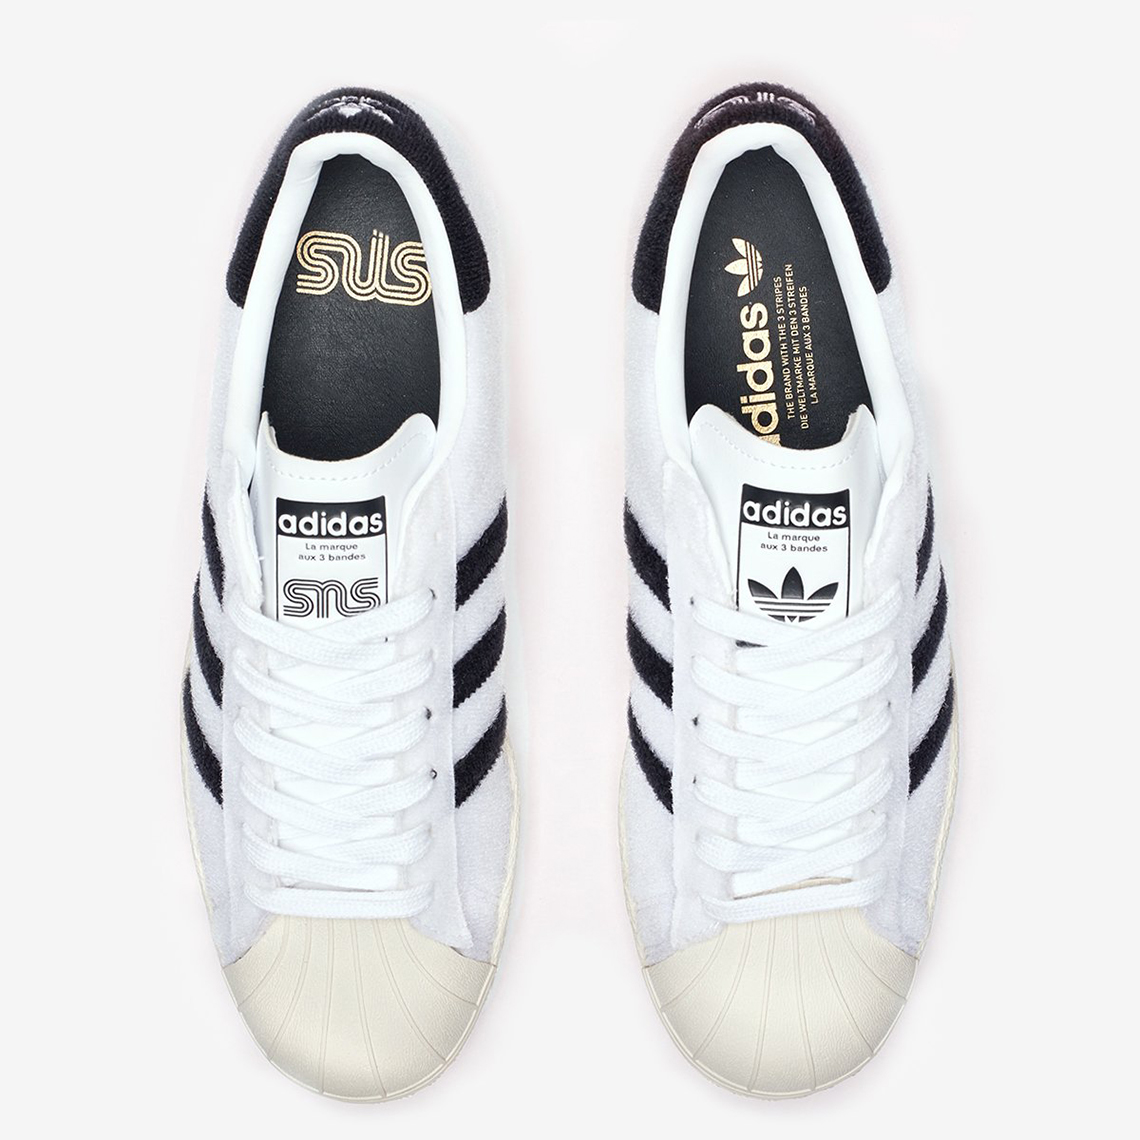 Sns Adidas Superstar 80s Kinenbi Release Date 6